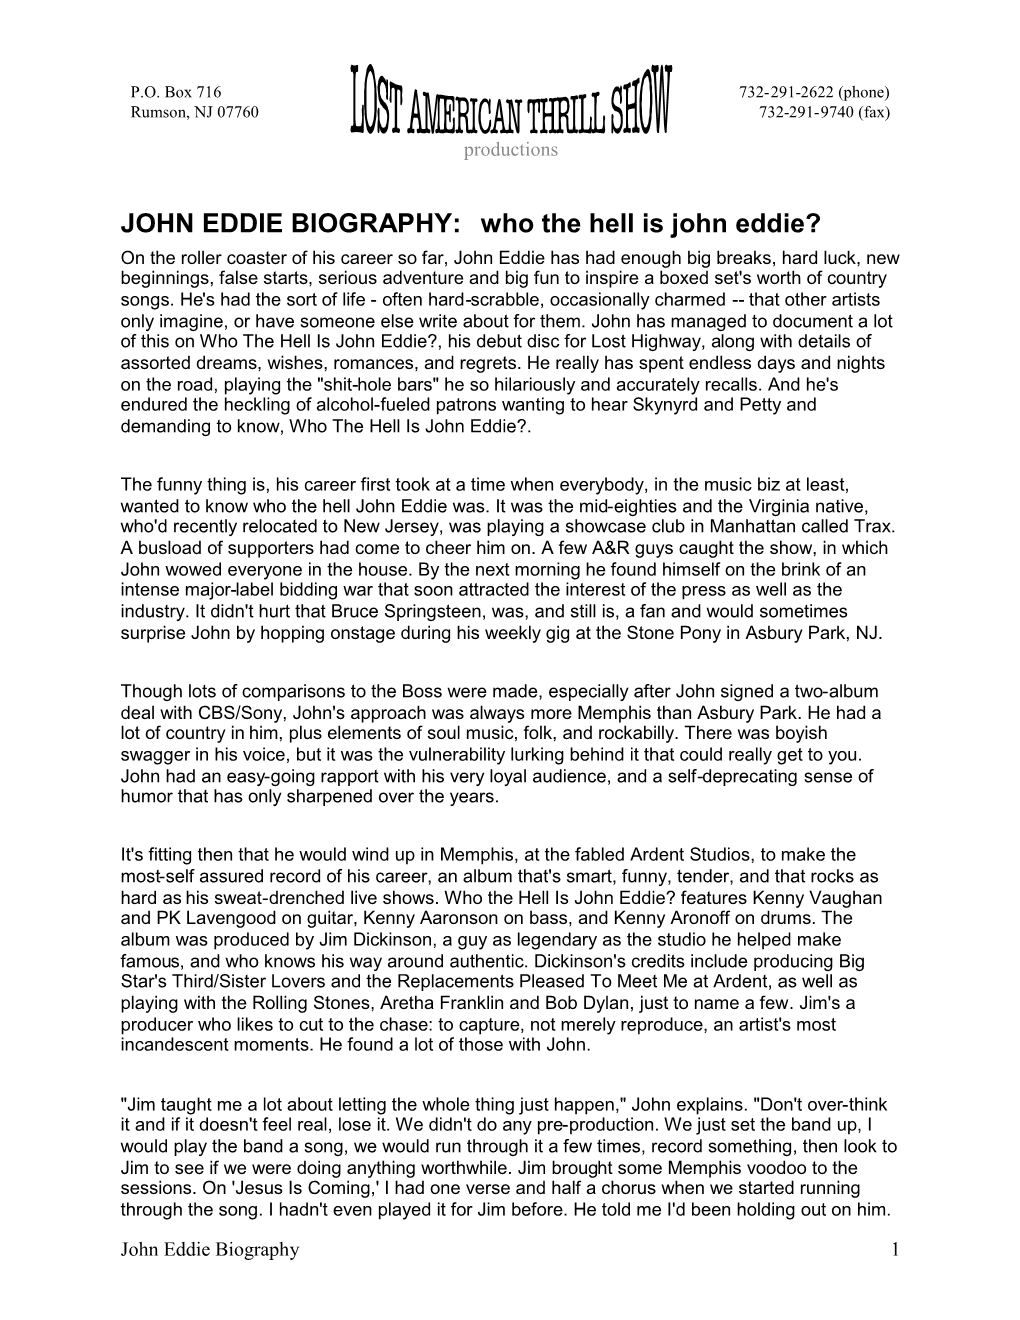 Who the Hell Is John Eddie?